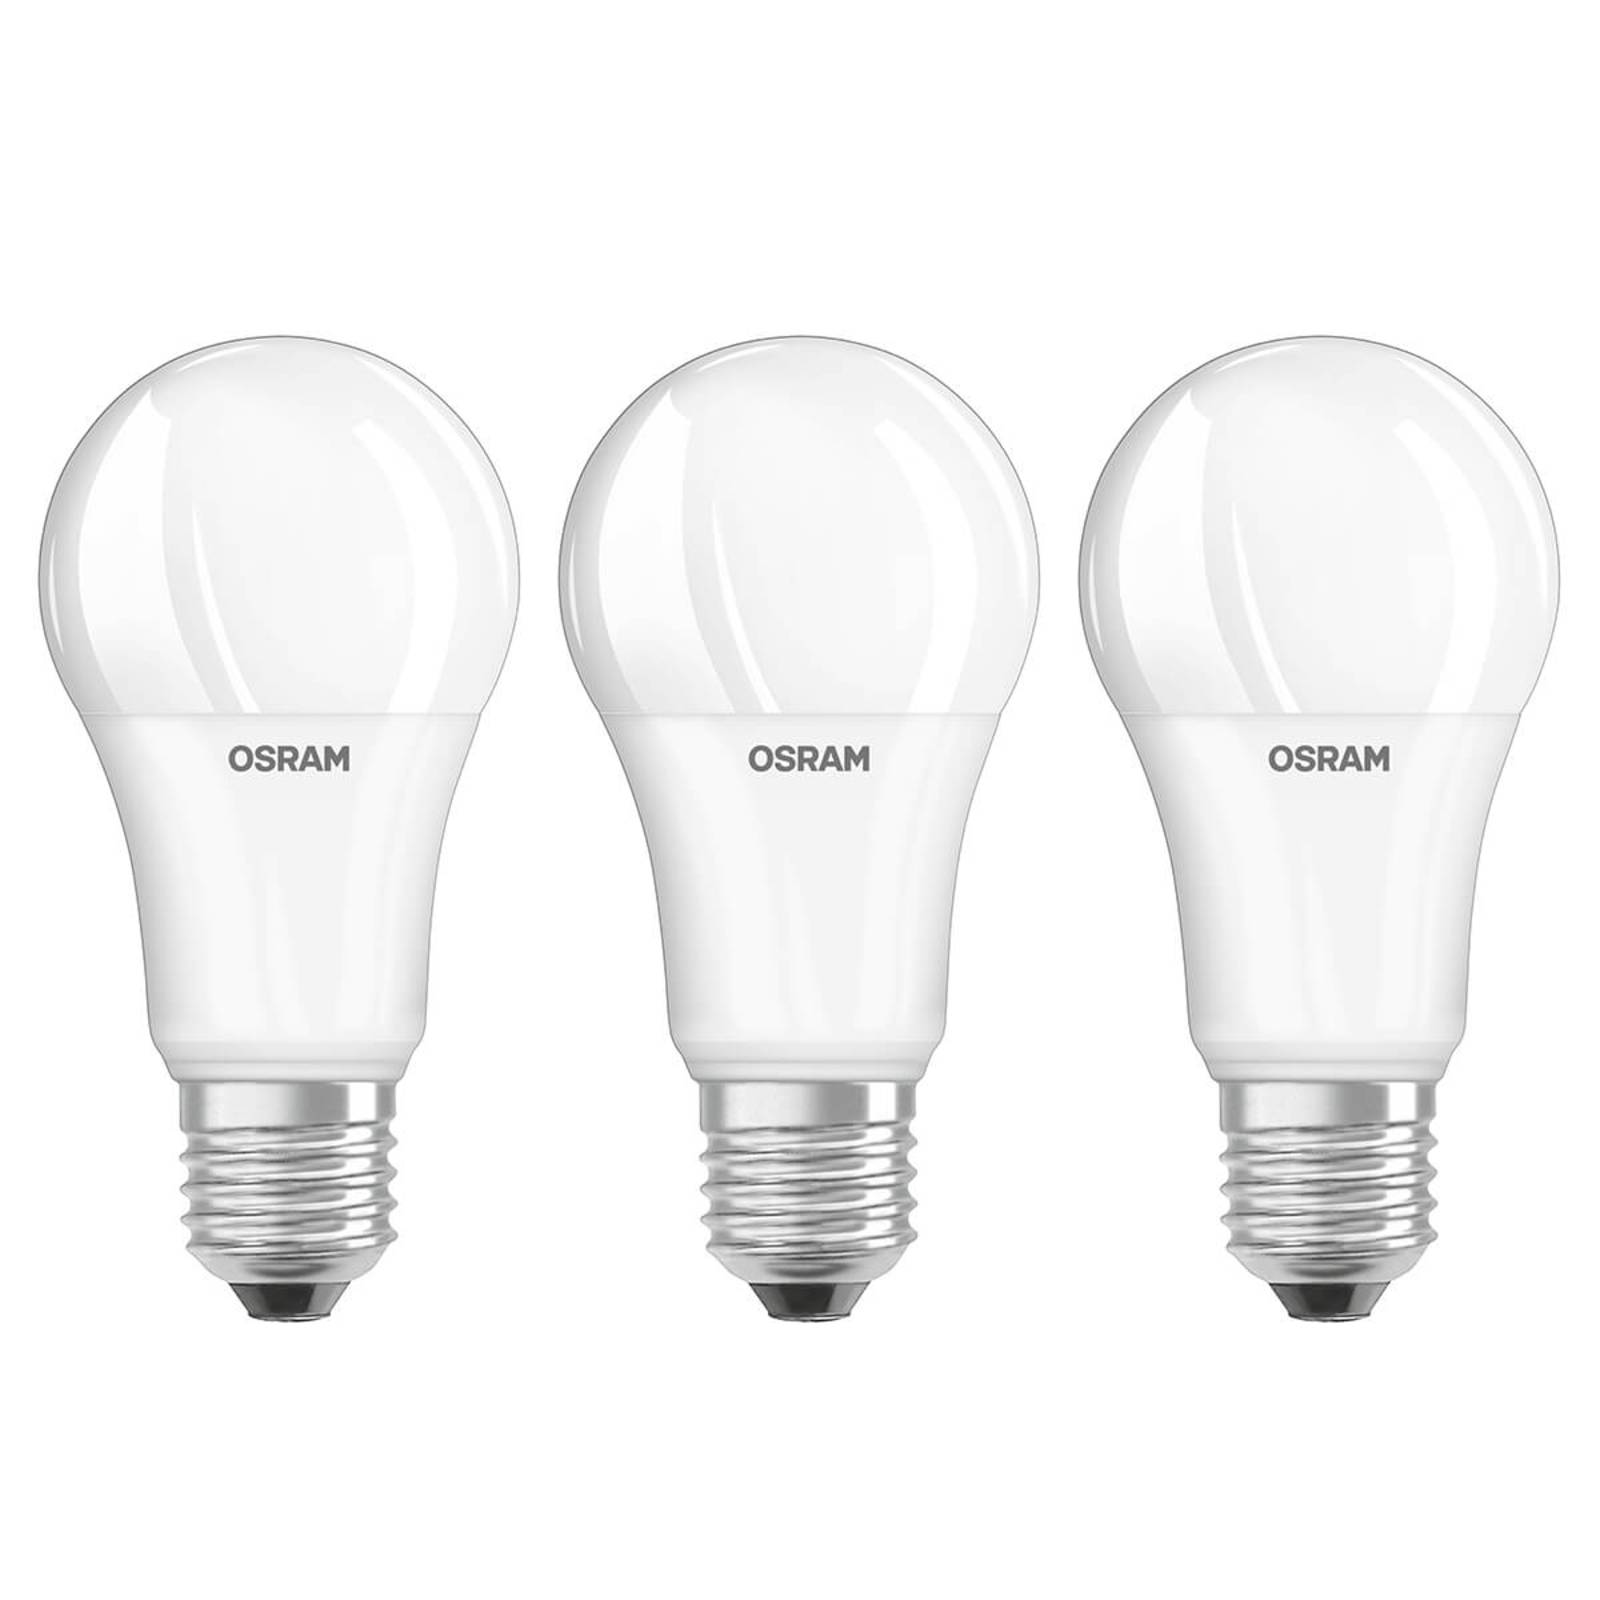 Osram LED-Lampe E27 14W, warmweiß, 3er-Set